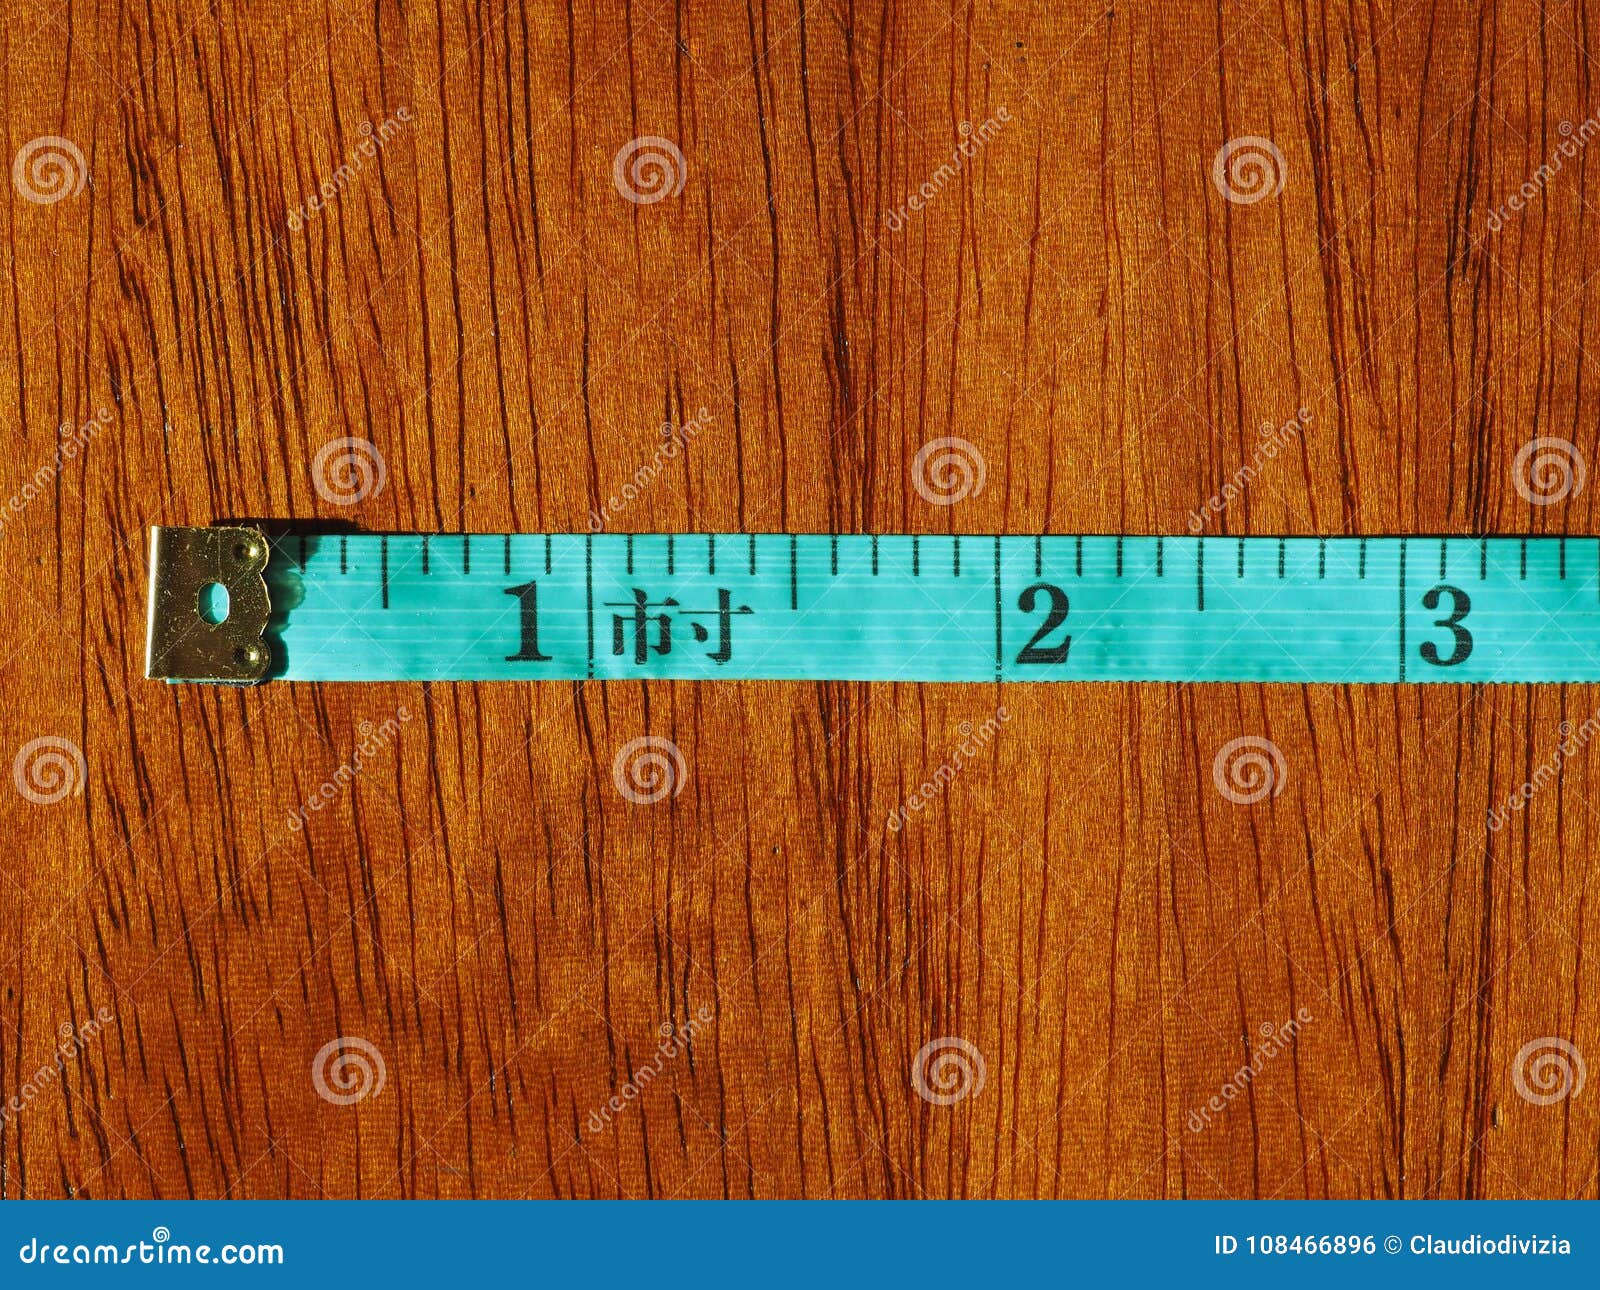 https://thumbs.dreamstime.com/z/tailor-tape-ruler-cun-chinese-inch-tailor-tape-ruler-cun-aka-chinese-inch-measuring-unit-108466896.jpg